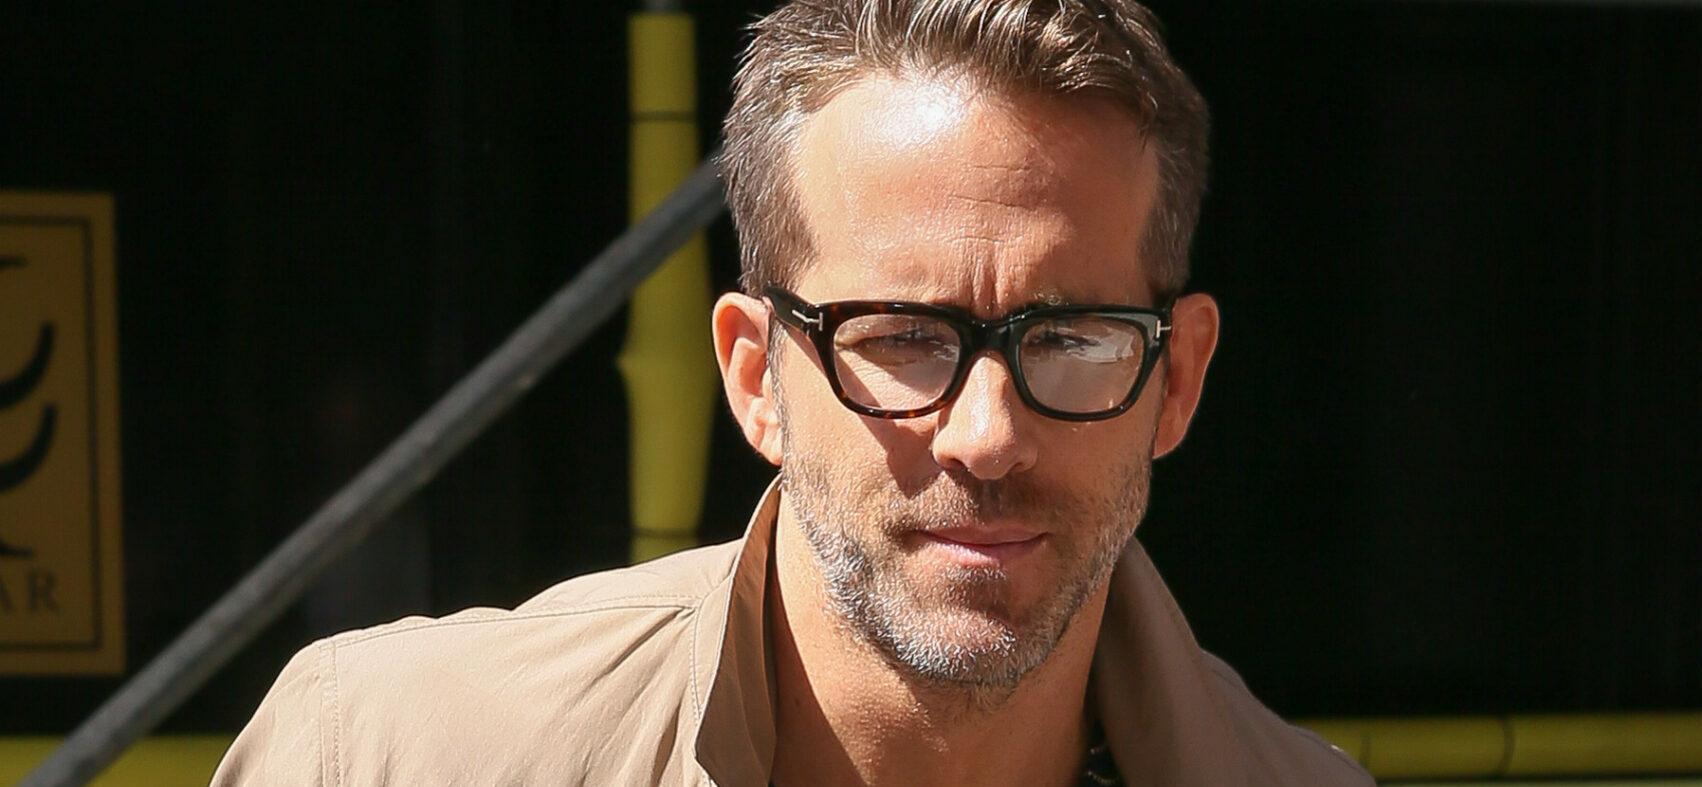 Ryan Reynolds leaving Bauer Radio Studios after promoting his new film Deadpool 2 - London